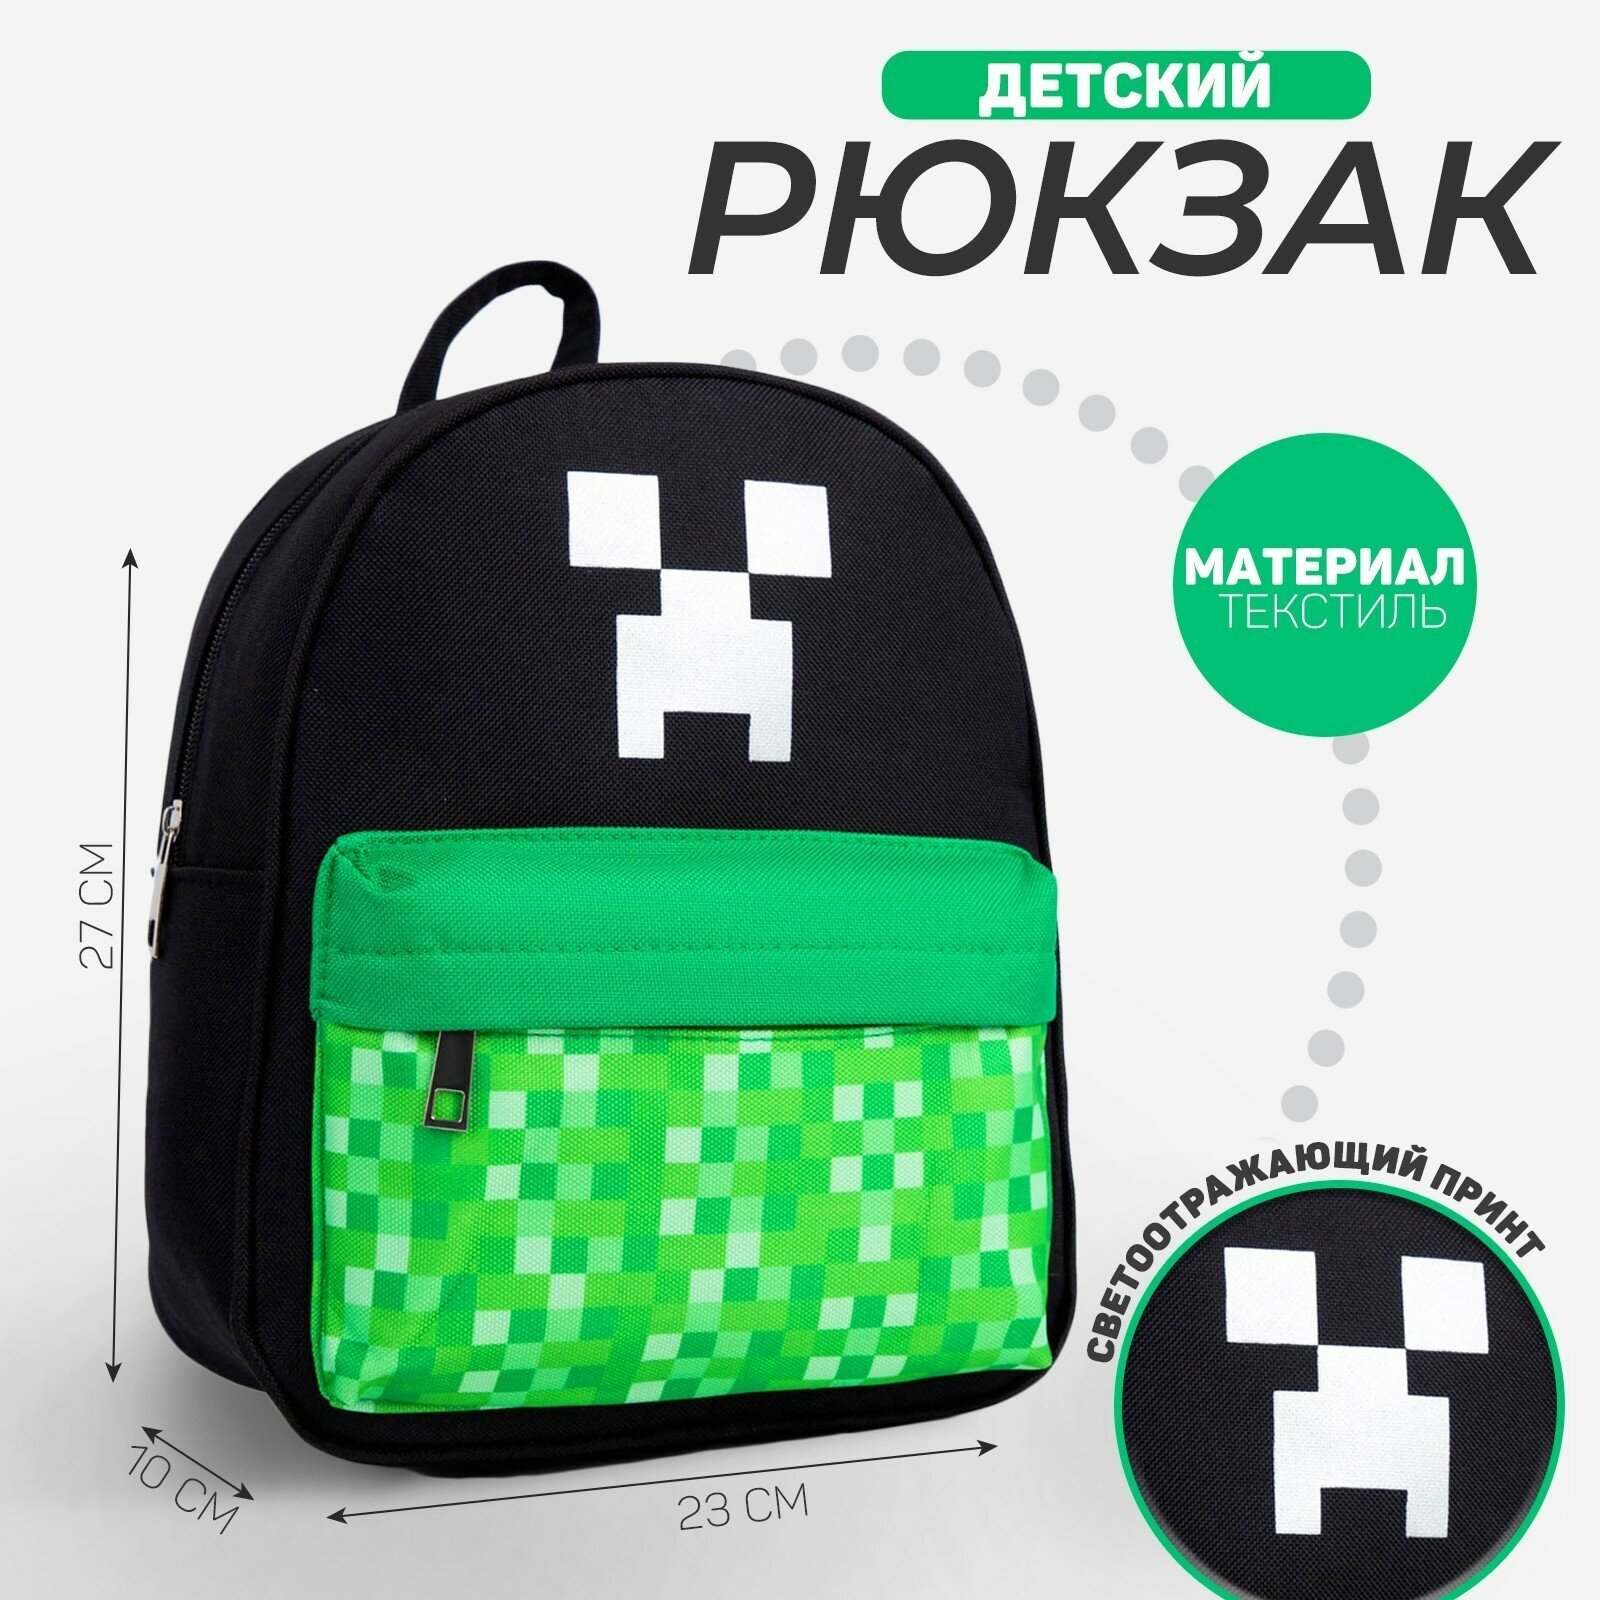 Рюкзак текстильный c карманом "Пиксели", светоотр. элементы, 27 х 23 х 10 см